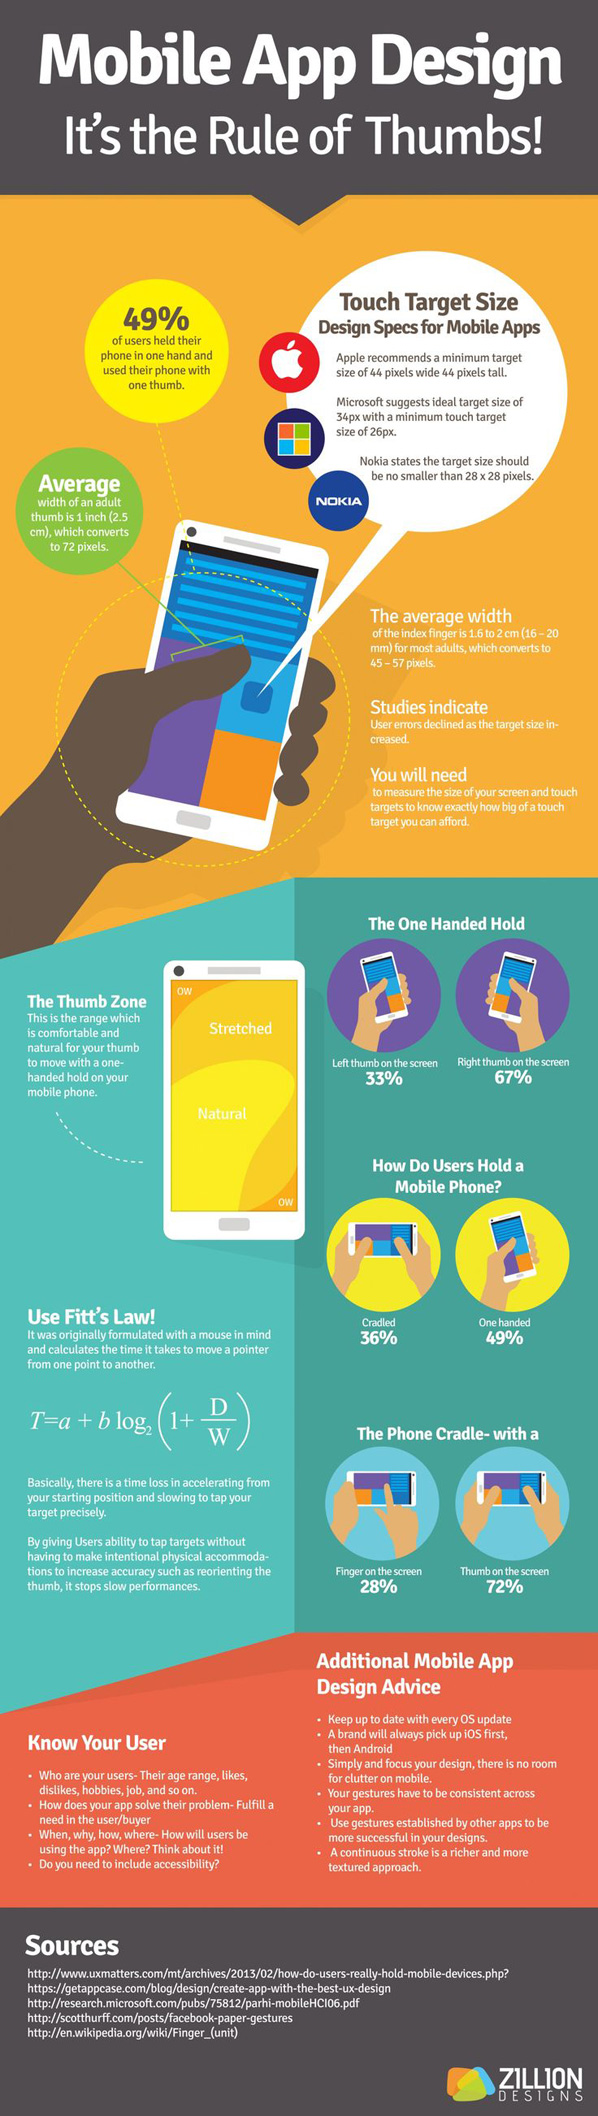 6-mobile-app-design-infographic